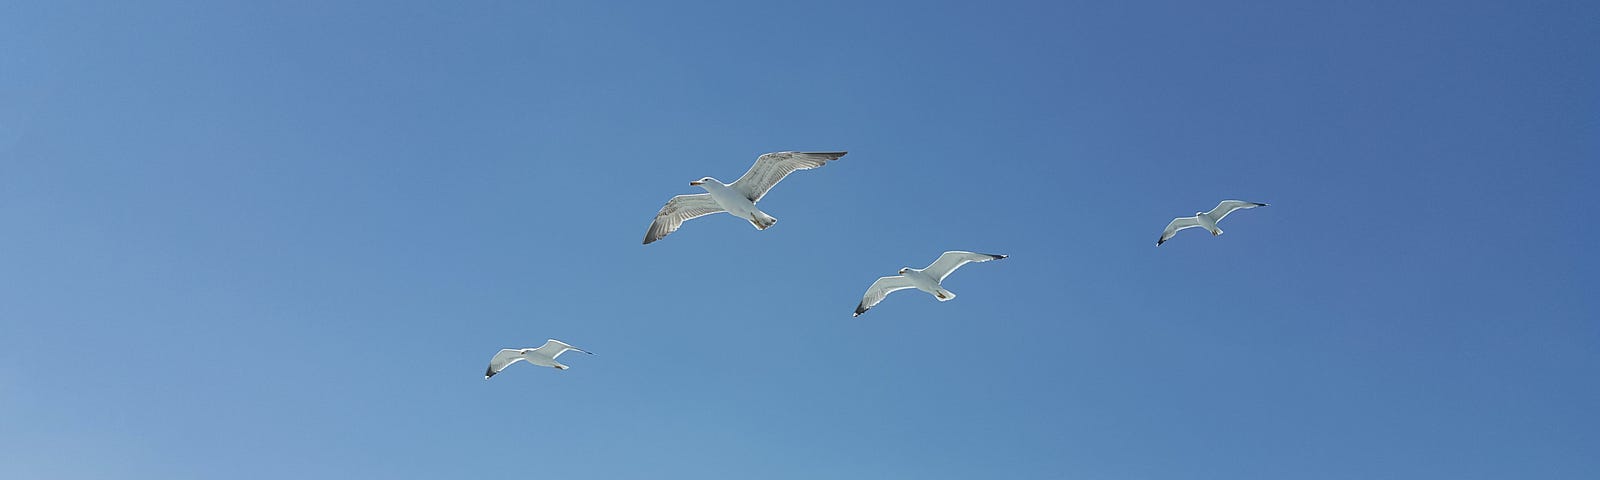 Gulls flying against a clear blue sky.